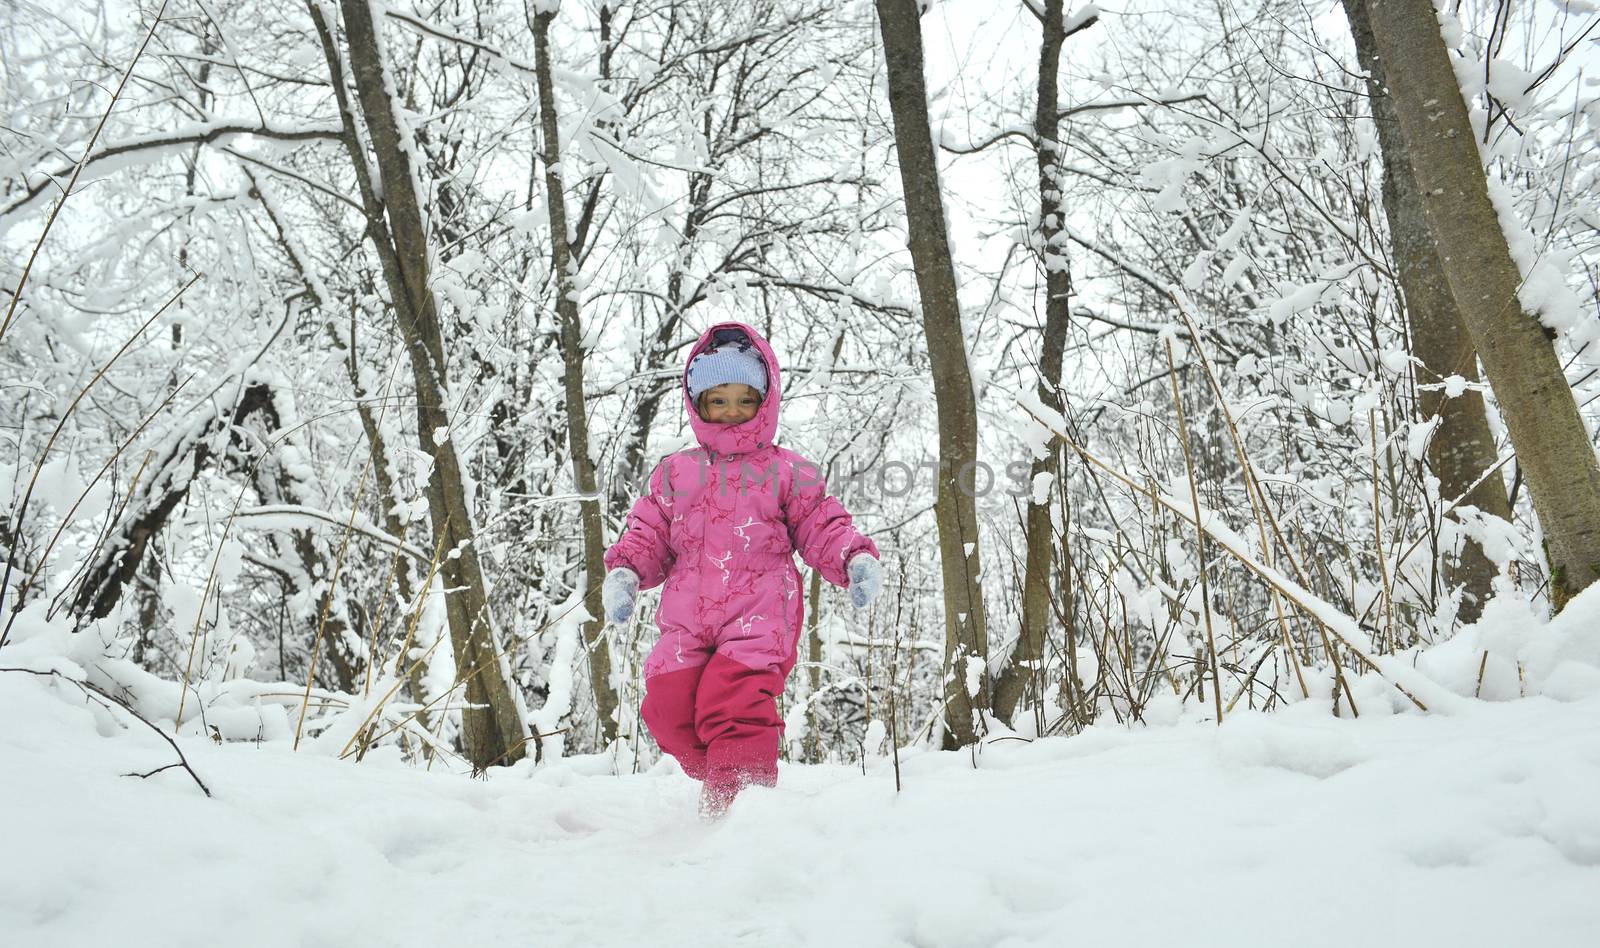 Little girl in winter forest Little girl in winter forest by SURZ